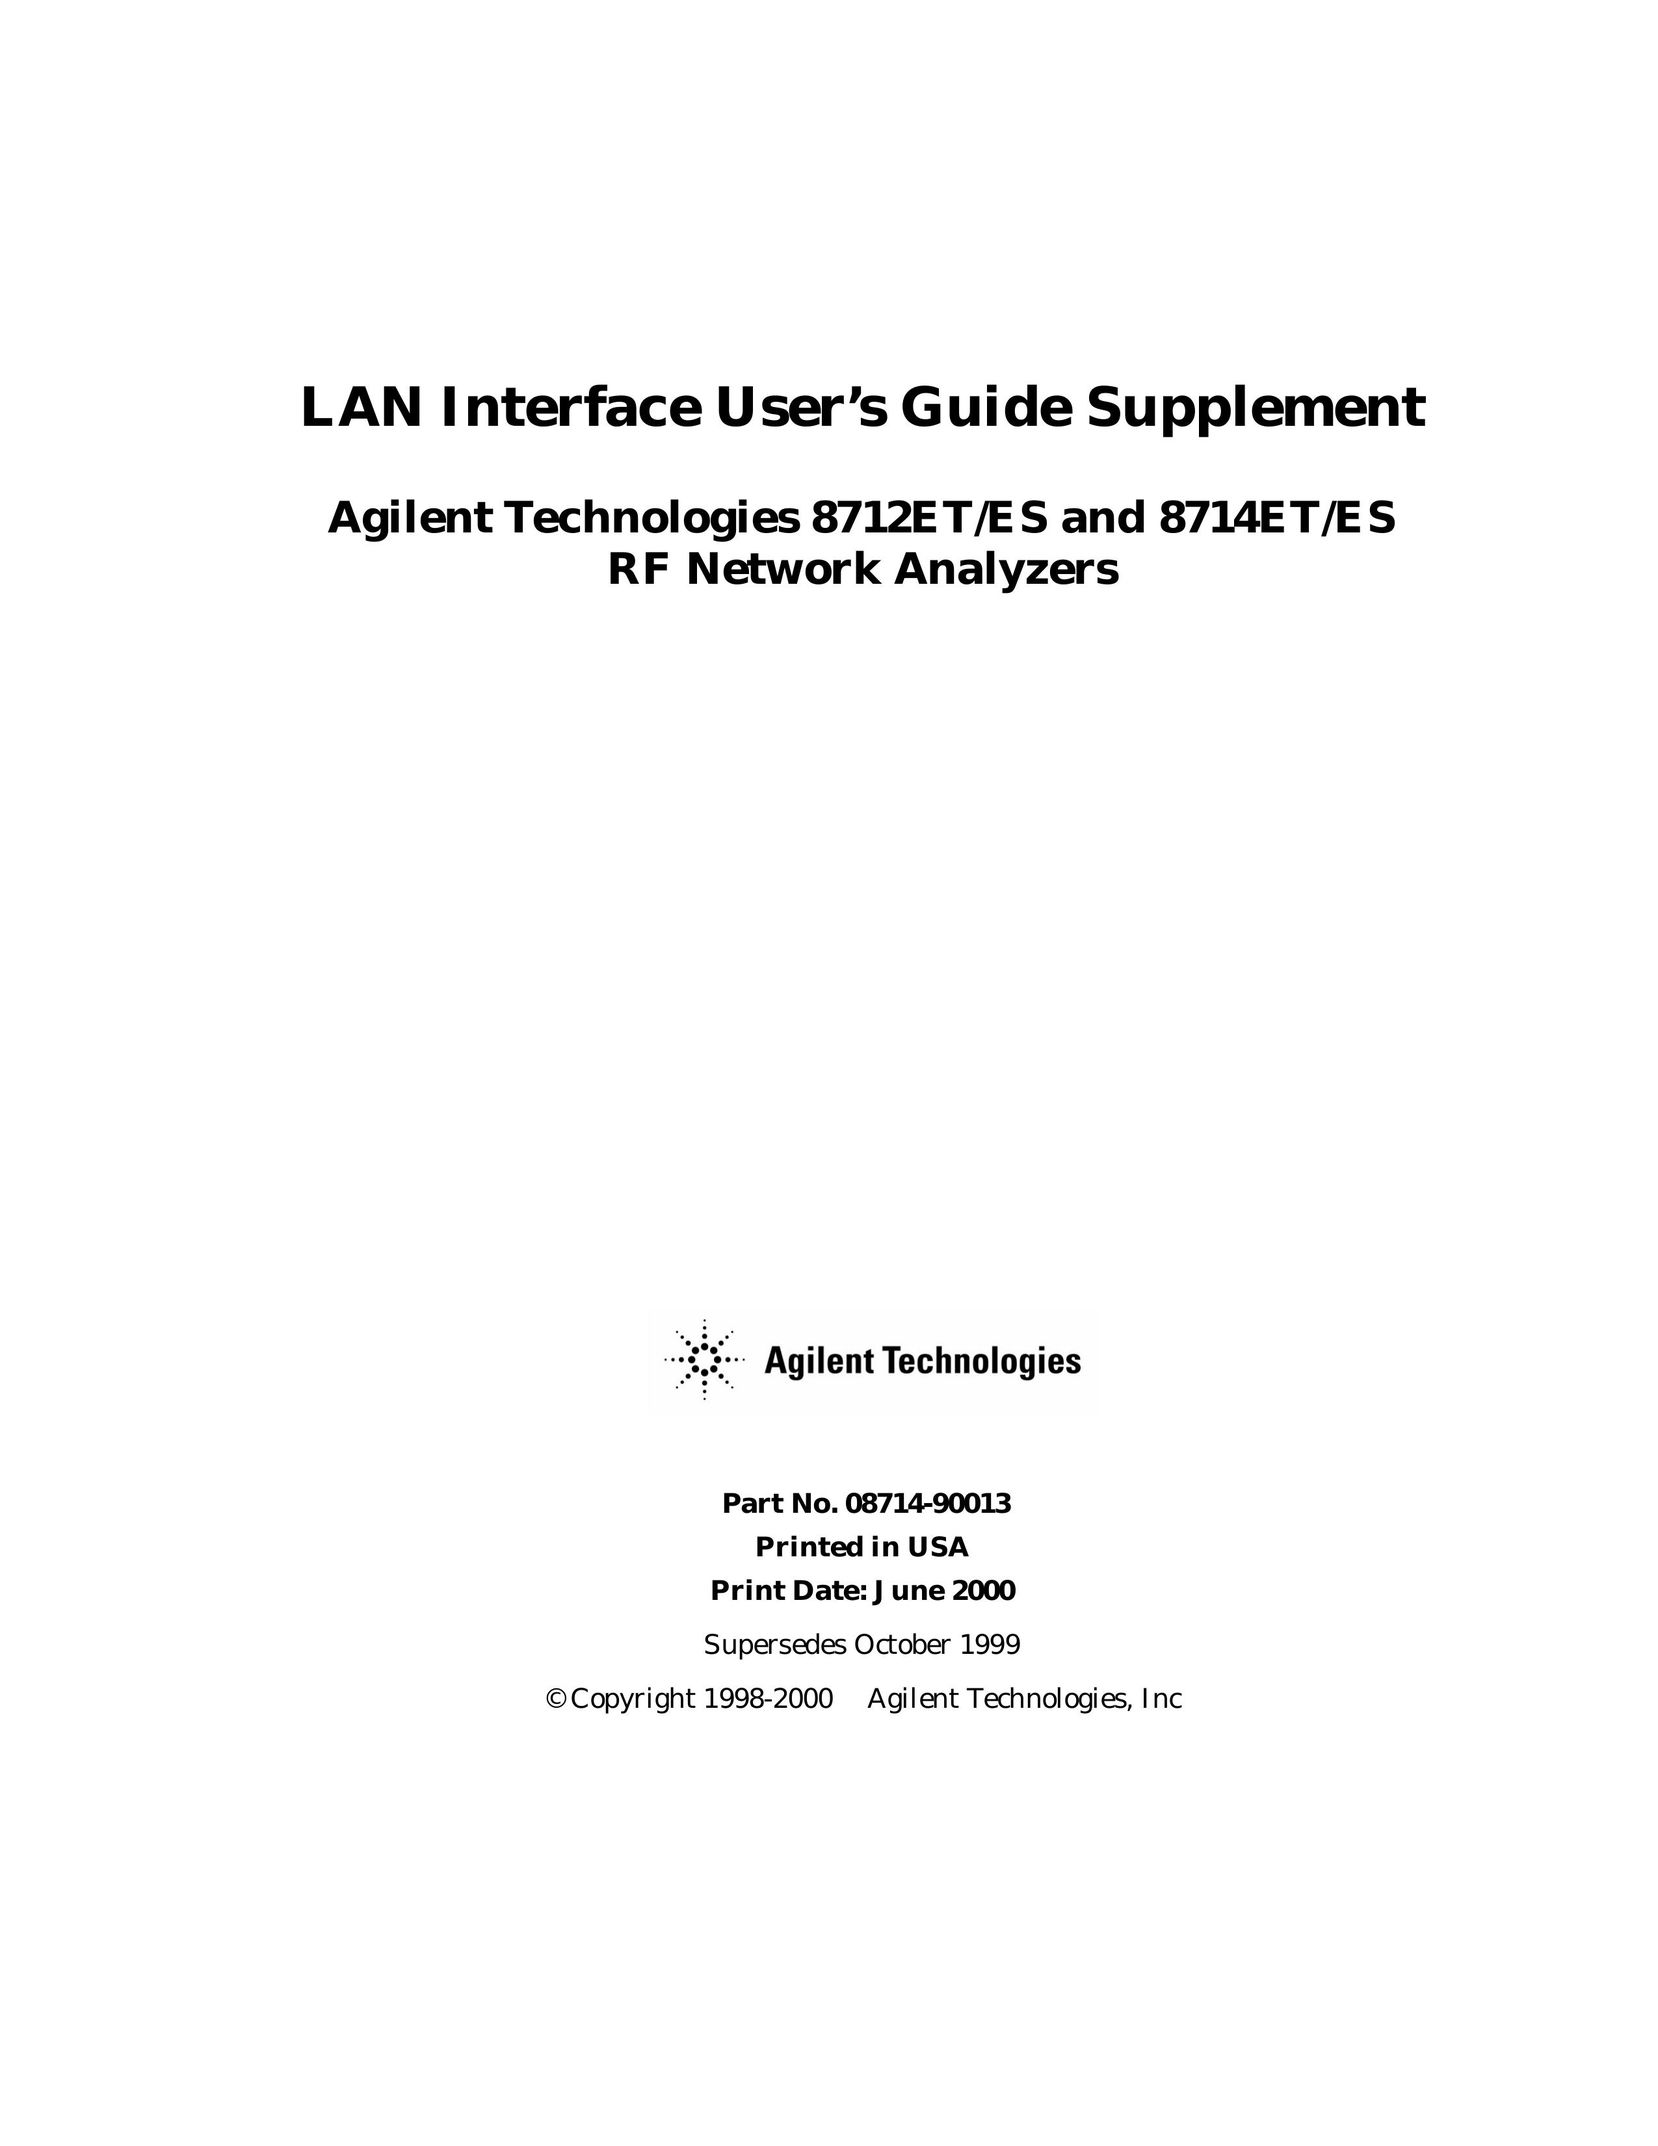 Agilent Technologies ES Switch User Manual